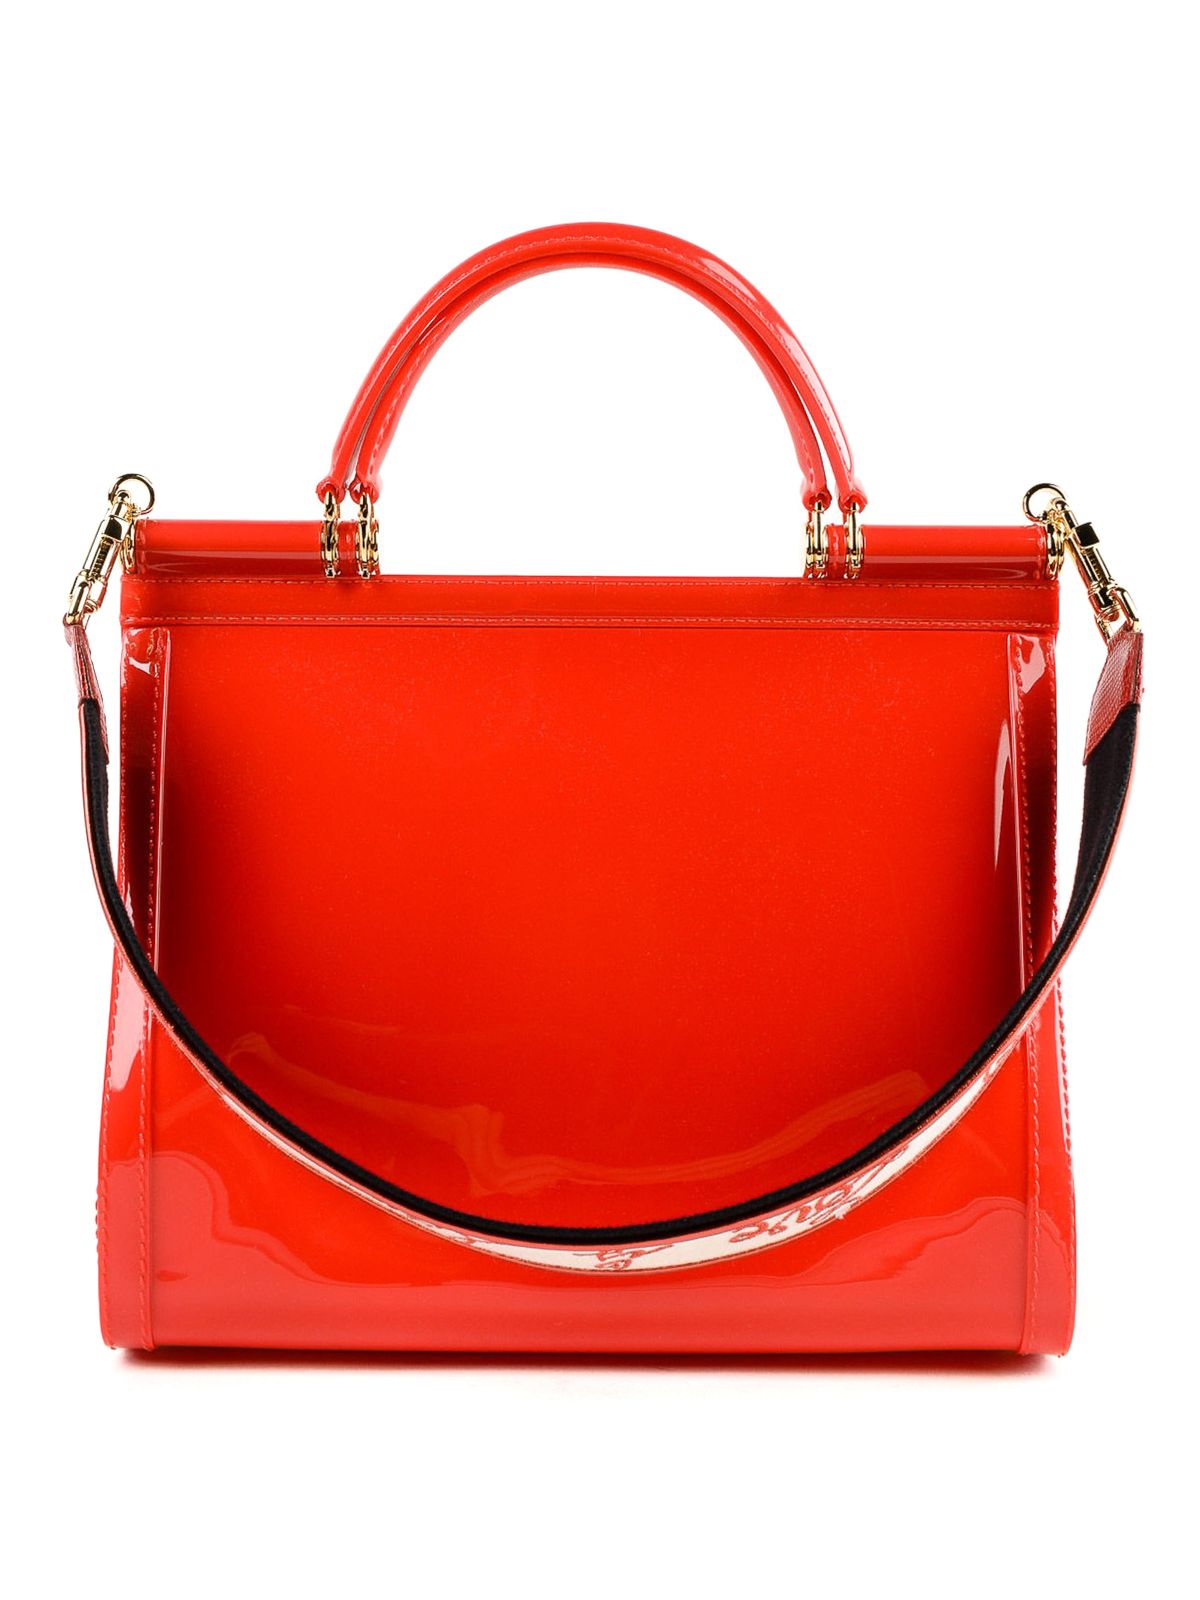 Elegant Red Sicily Shoulder Bag with Gold-Tone Accents